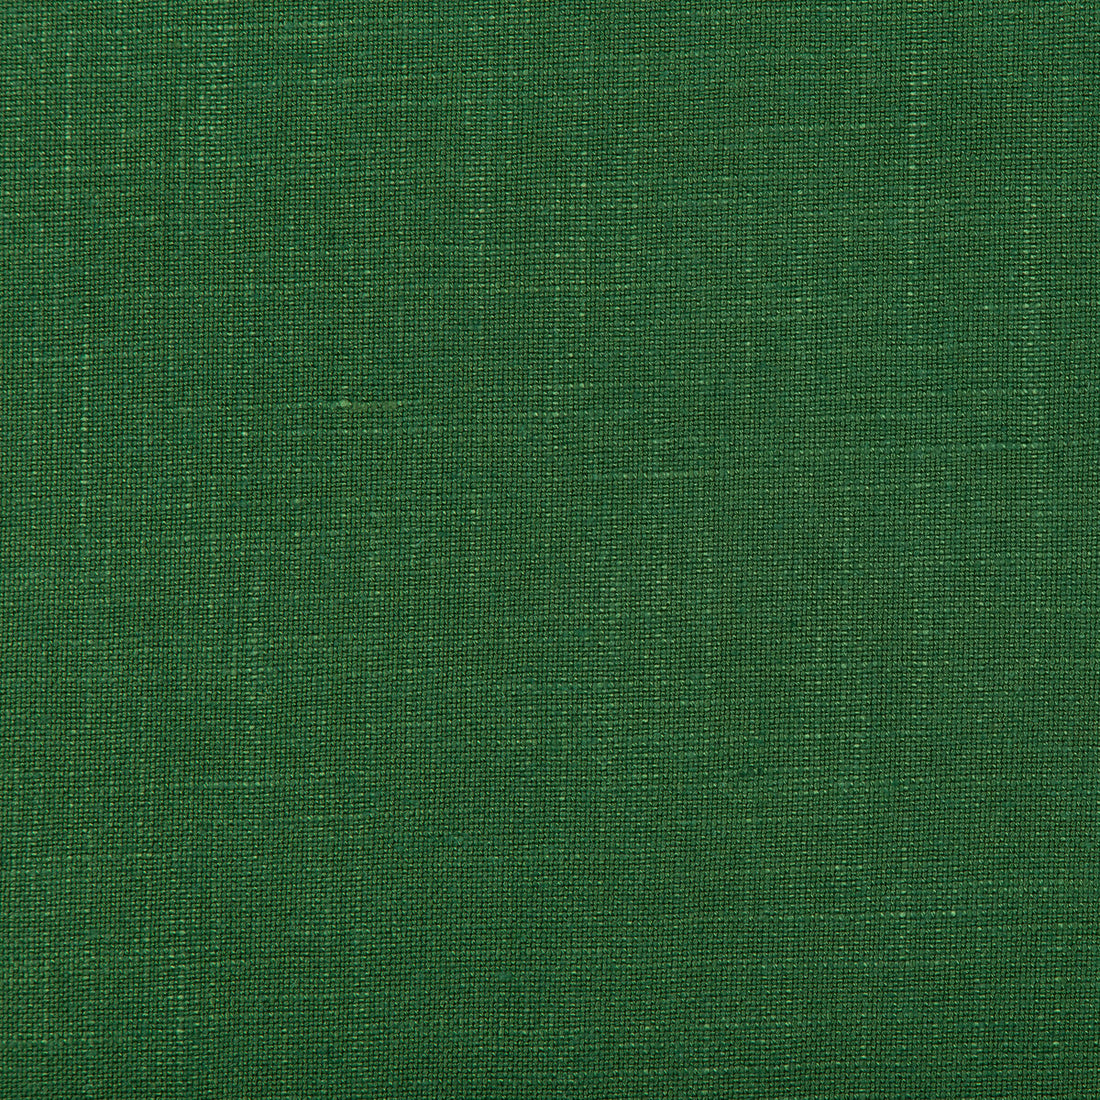 Aura fabric in cilantro color - pattern 35520.3.0 - by Kravet Design